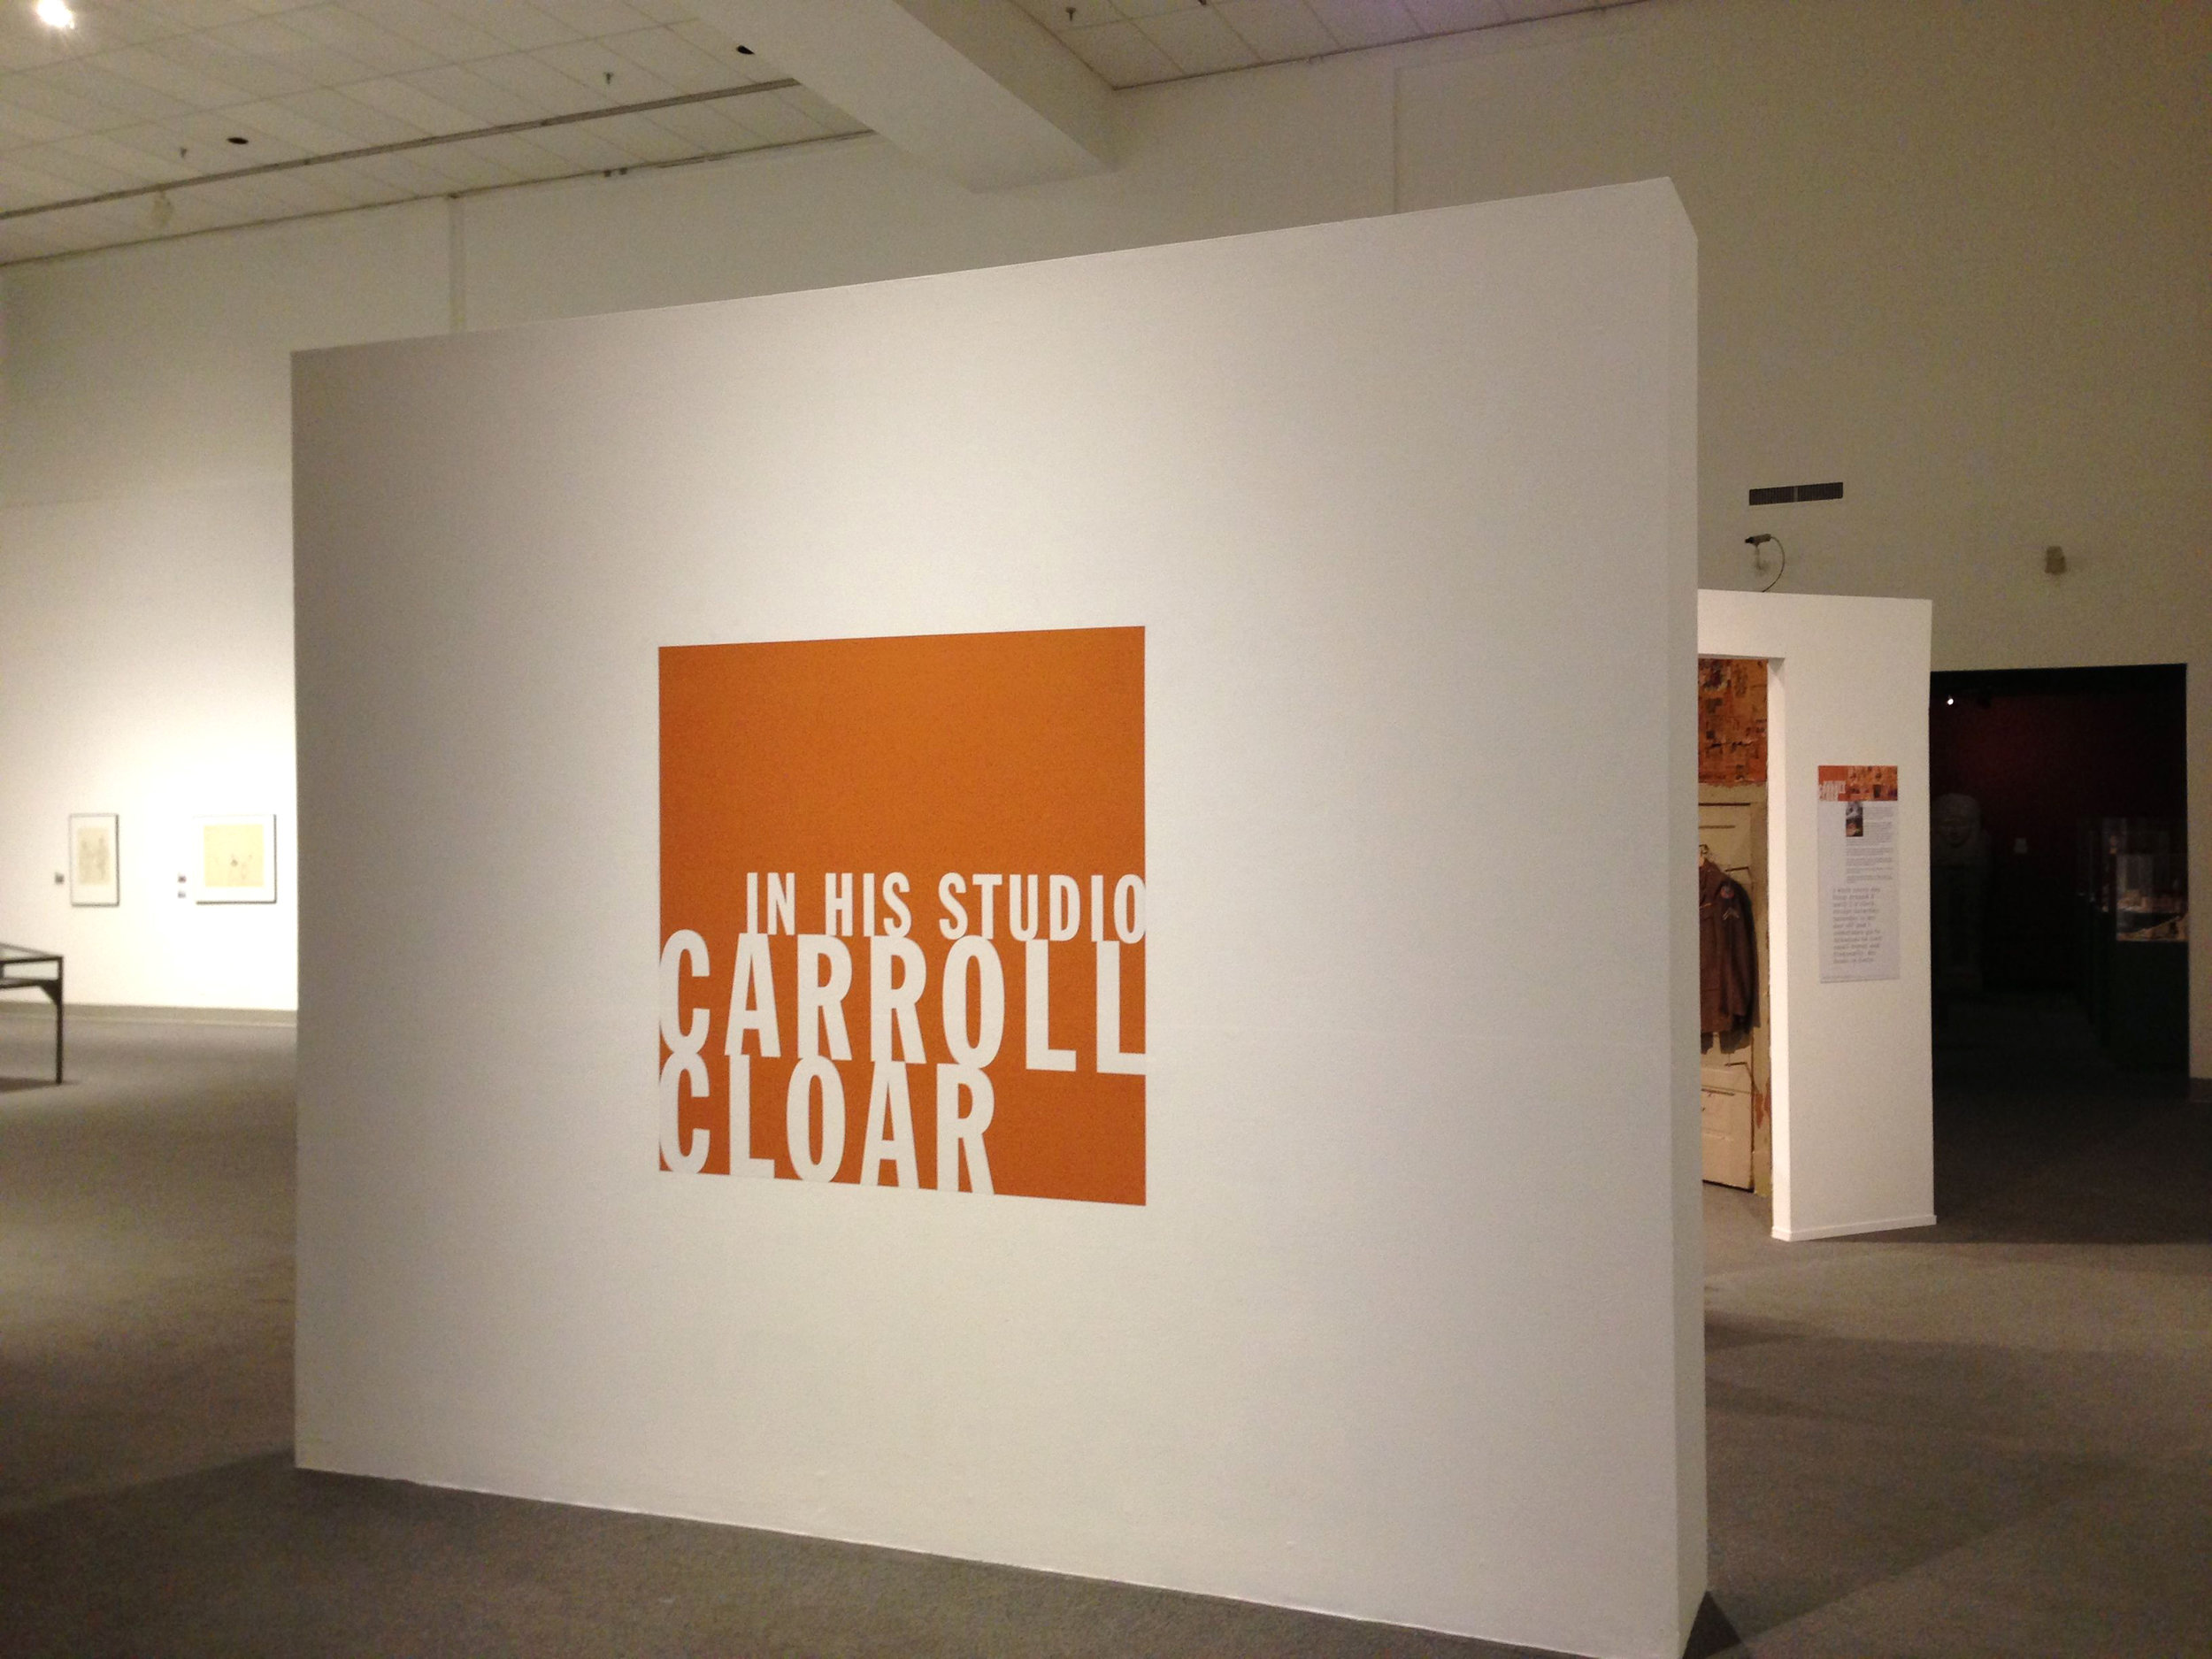  Carroll Cloar Exhibit, Catalog &amp; Marketing Materials design 